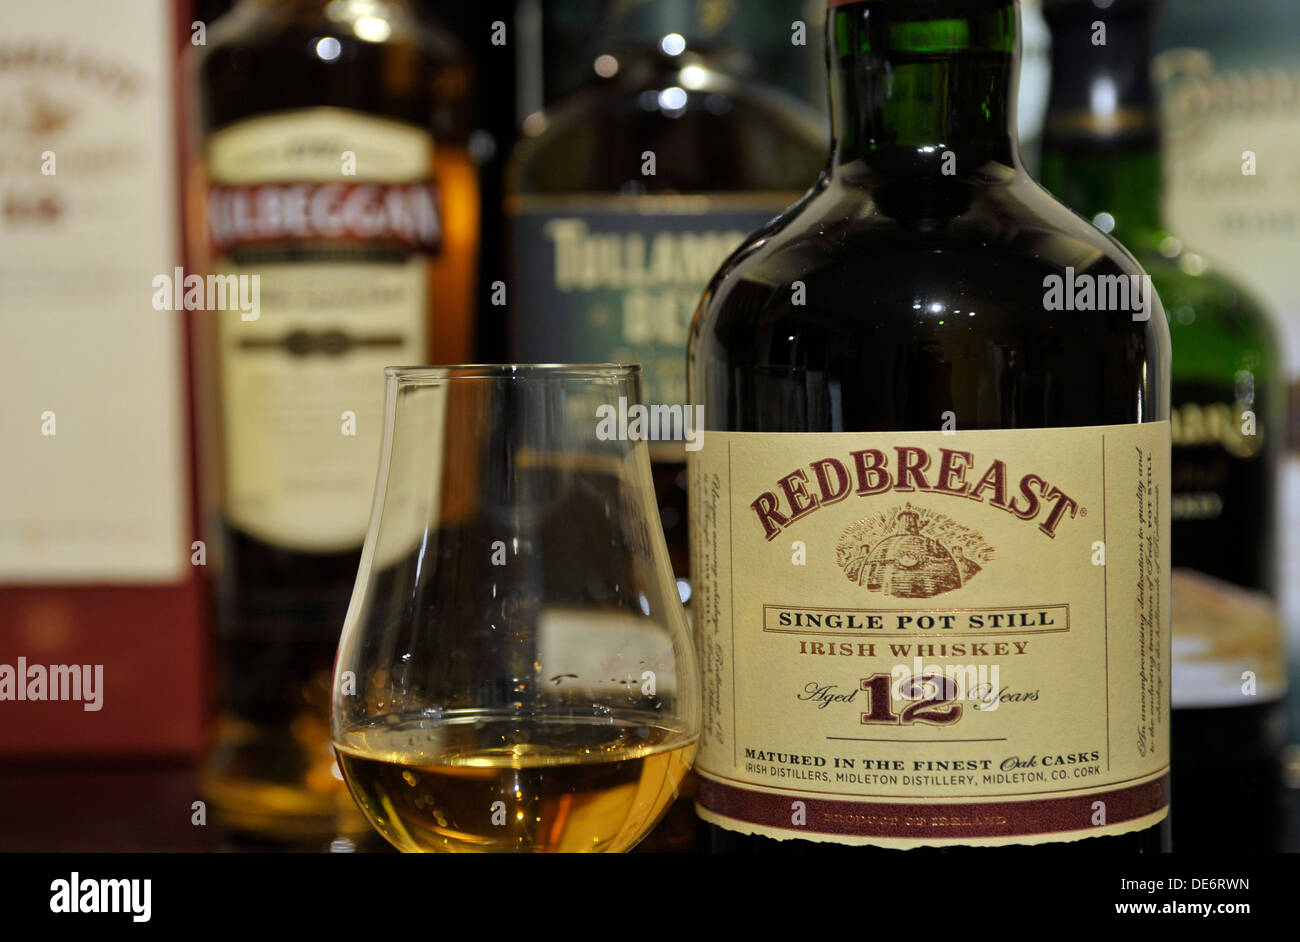 Bottle of aged 12 years Redbrest single pot still Irish whiskey and whiskey glass. Stock Photo